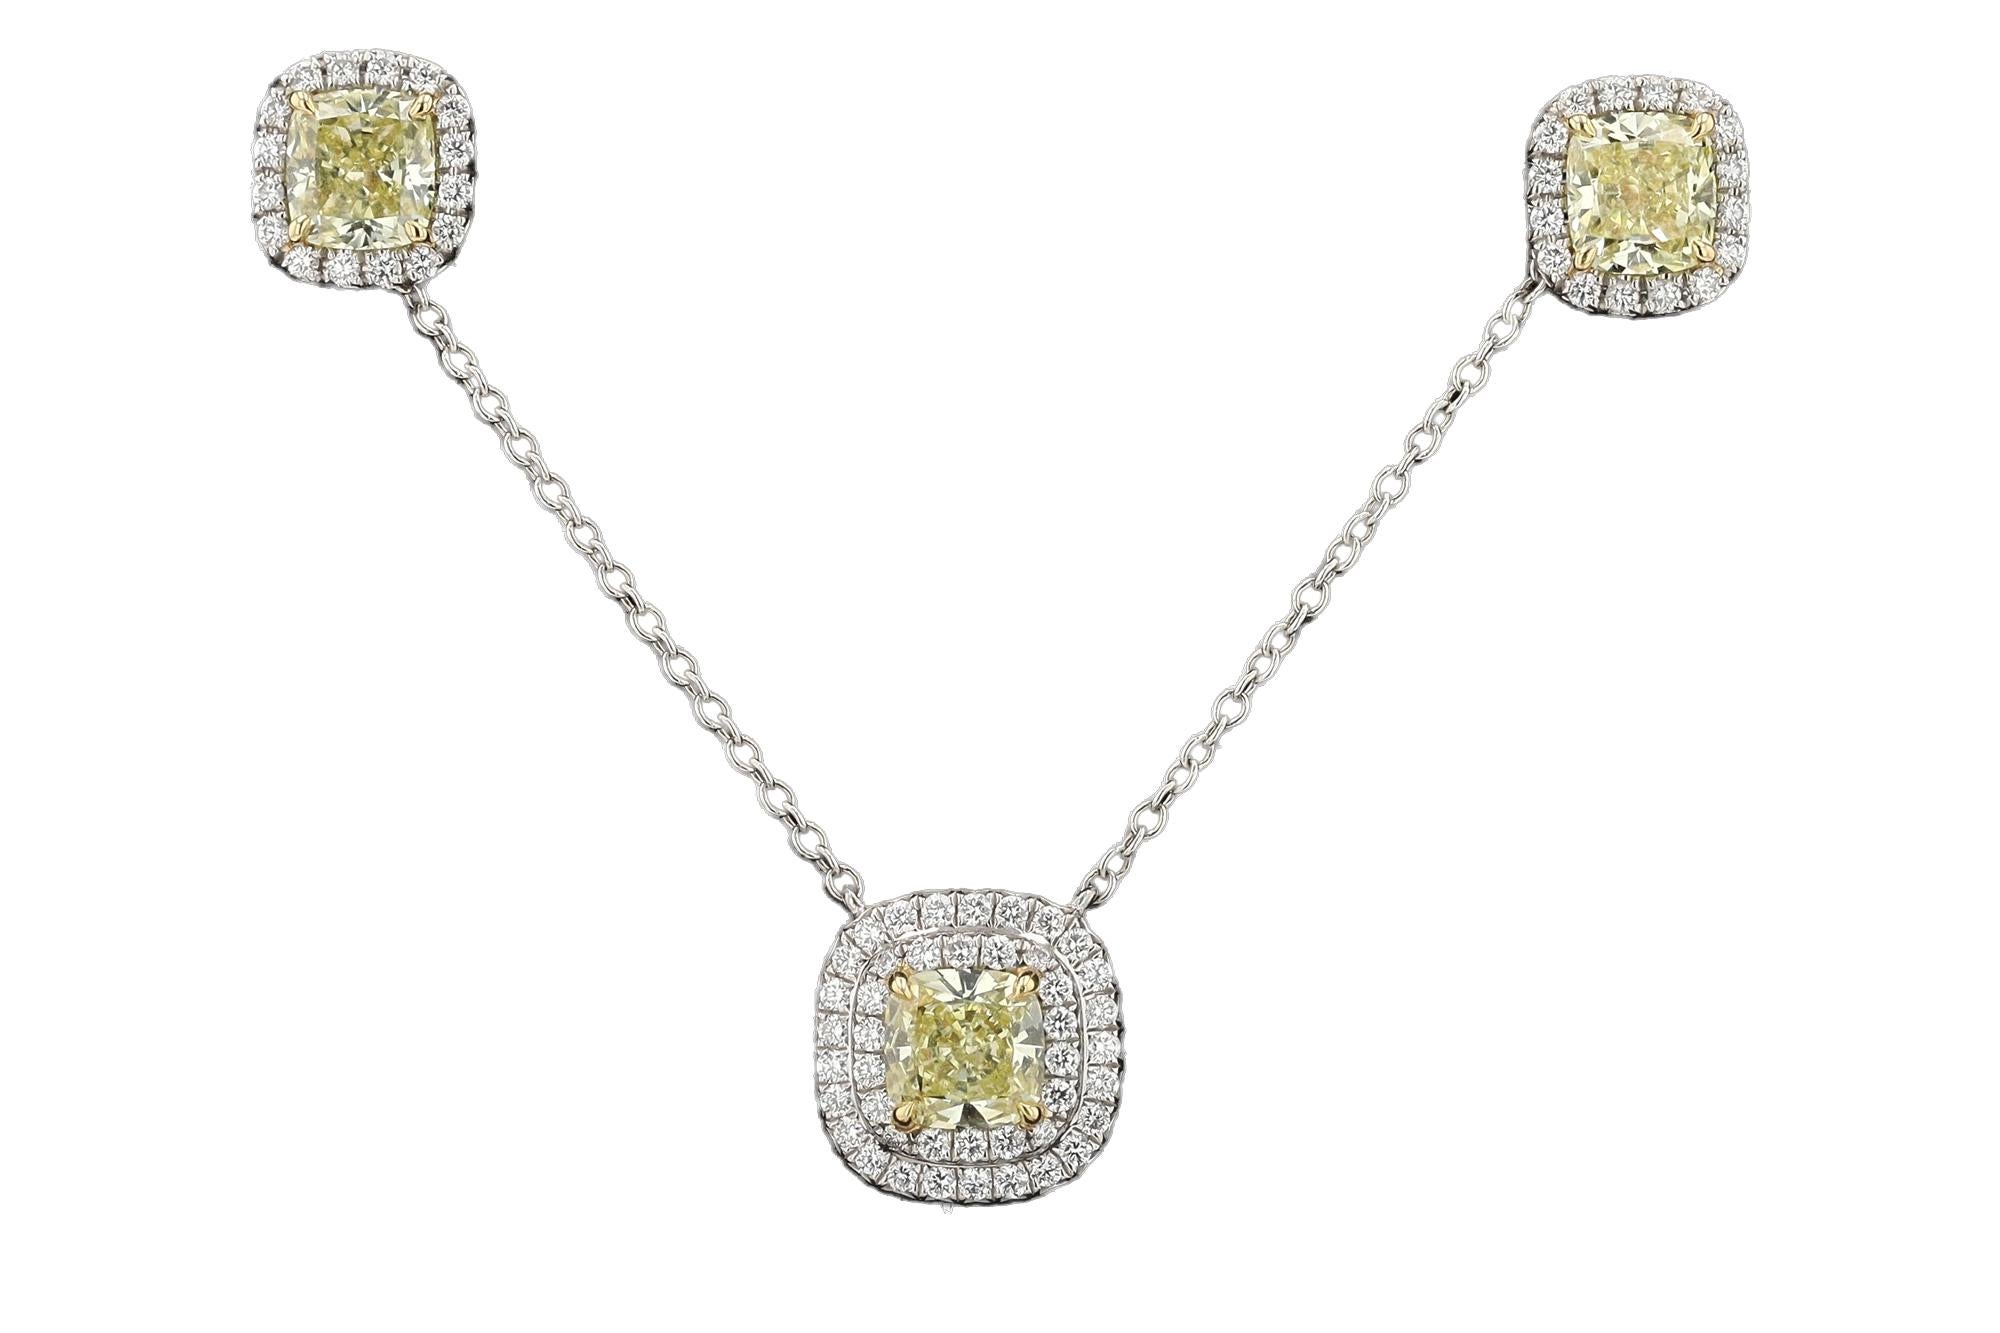 Contemporary Tiffany & Co. Soleste Fancy Intense Yellow Diamond Pendant Necklace